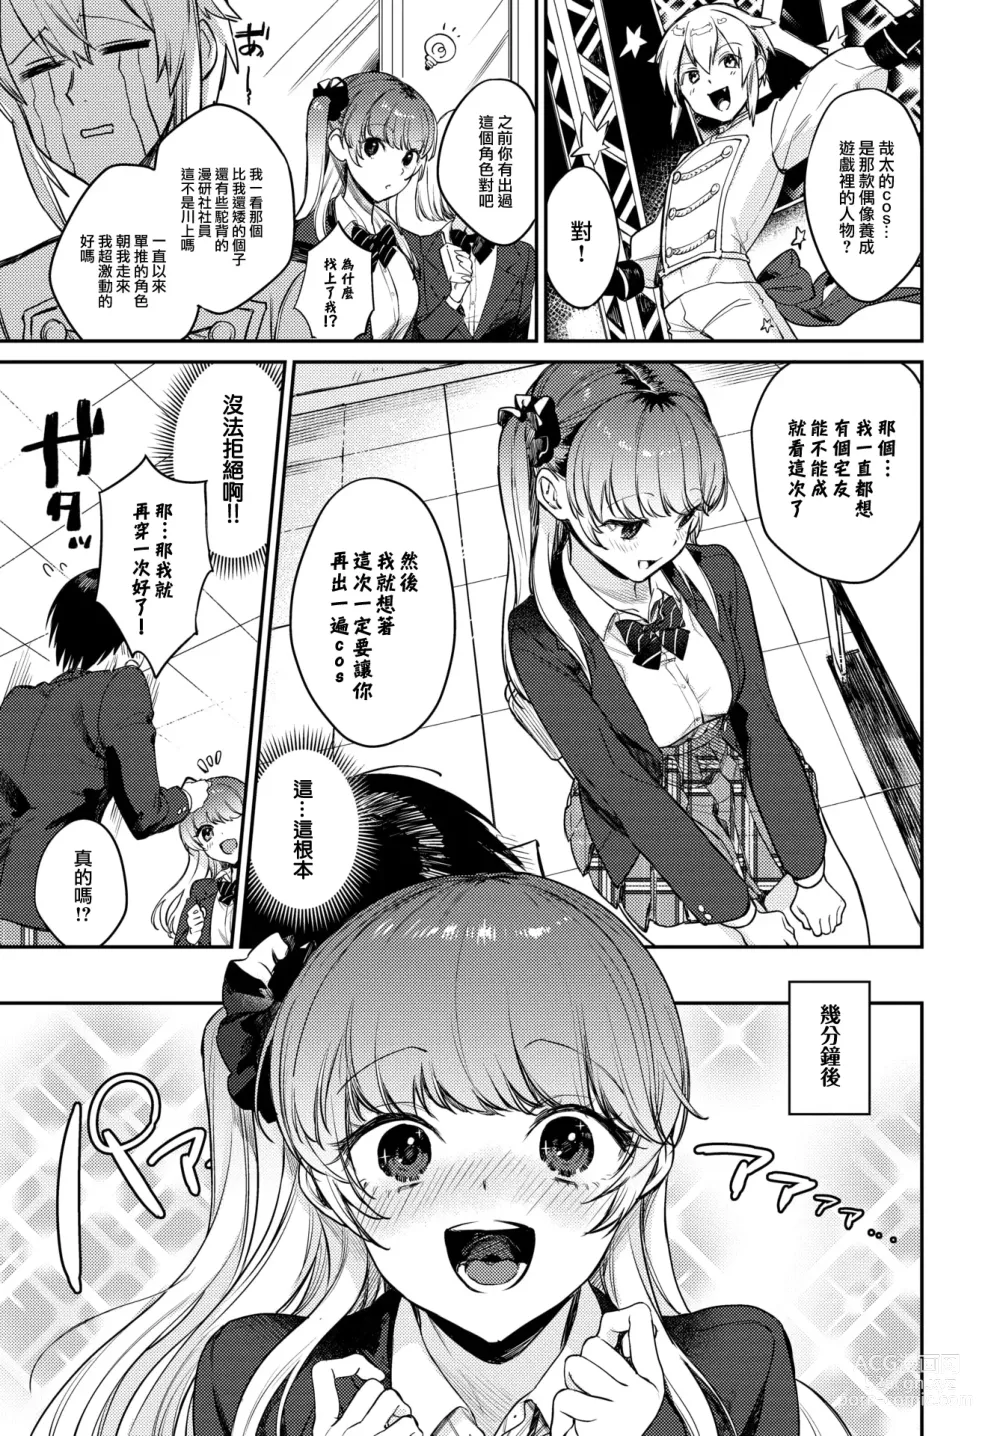 Page 32 of manga Muttsuri Bloom